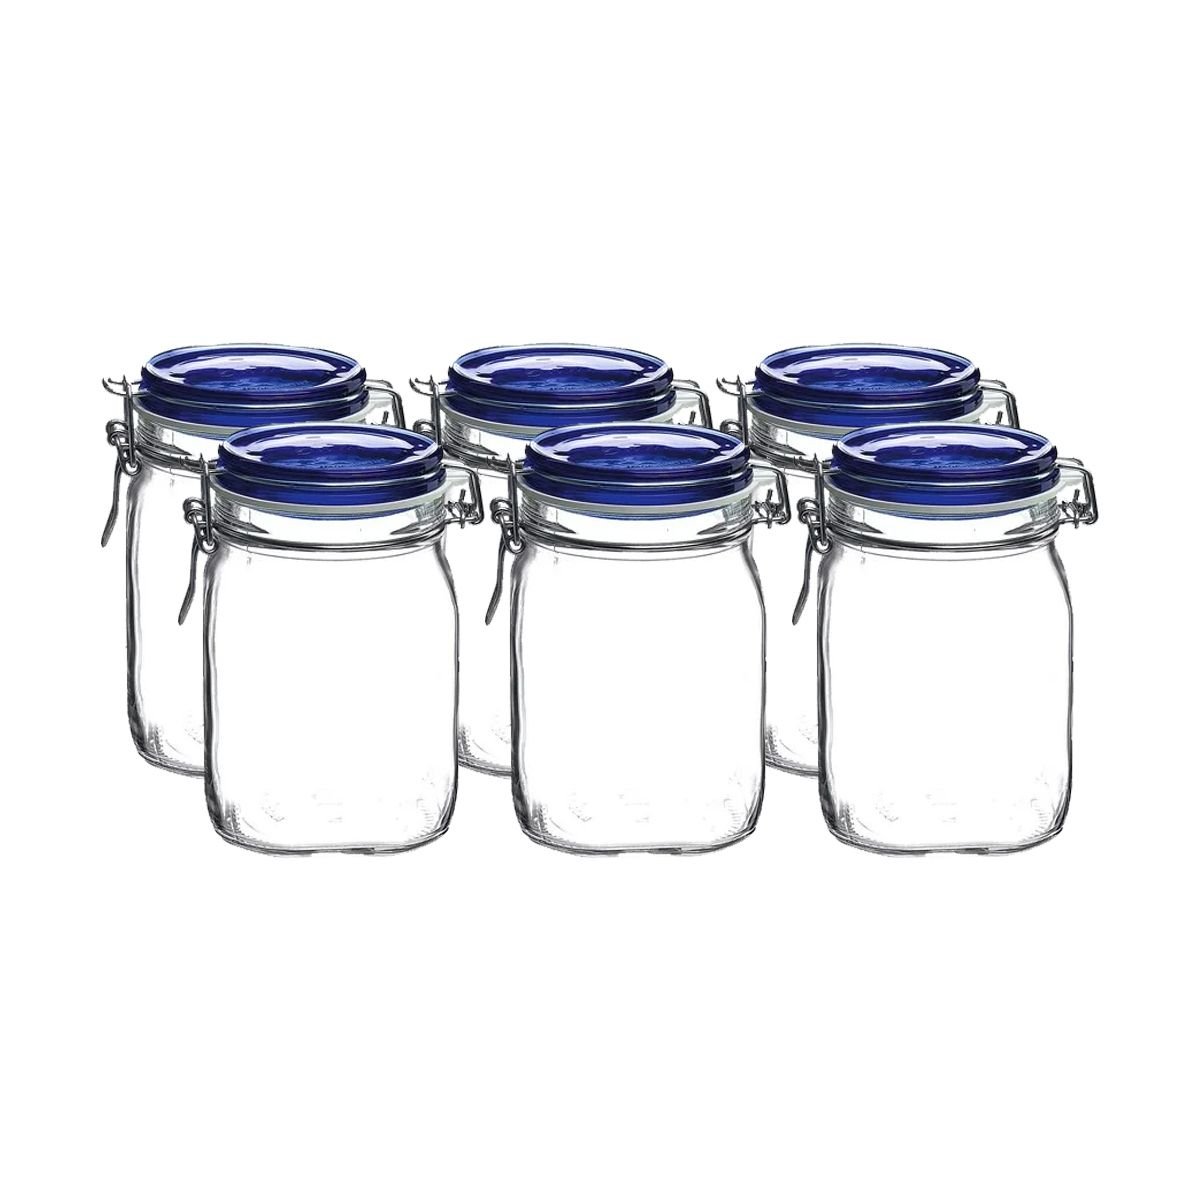 Mason Jar Lid - 12 Pack (fits 4.5 oz. Mason Jars only)